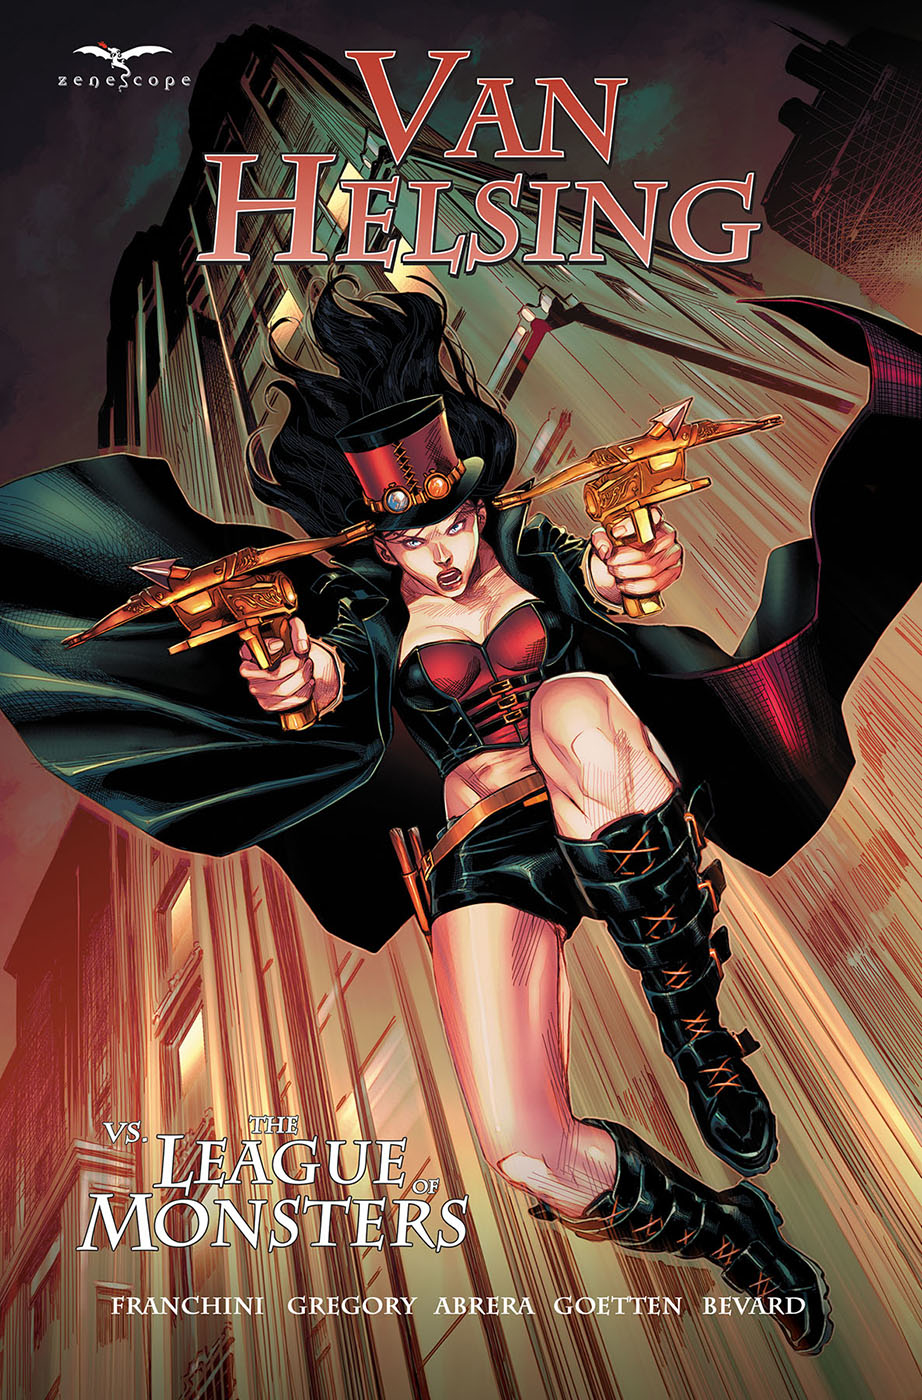 Van Helsing Vs League of Monsters Graphic Novel